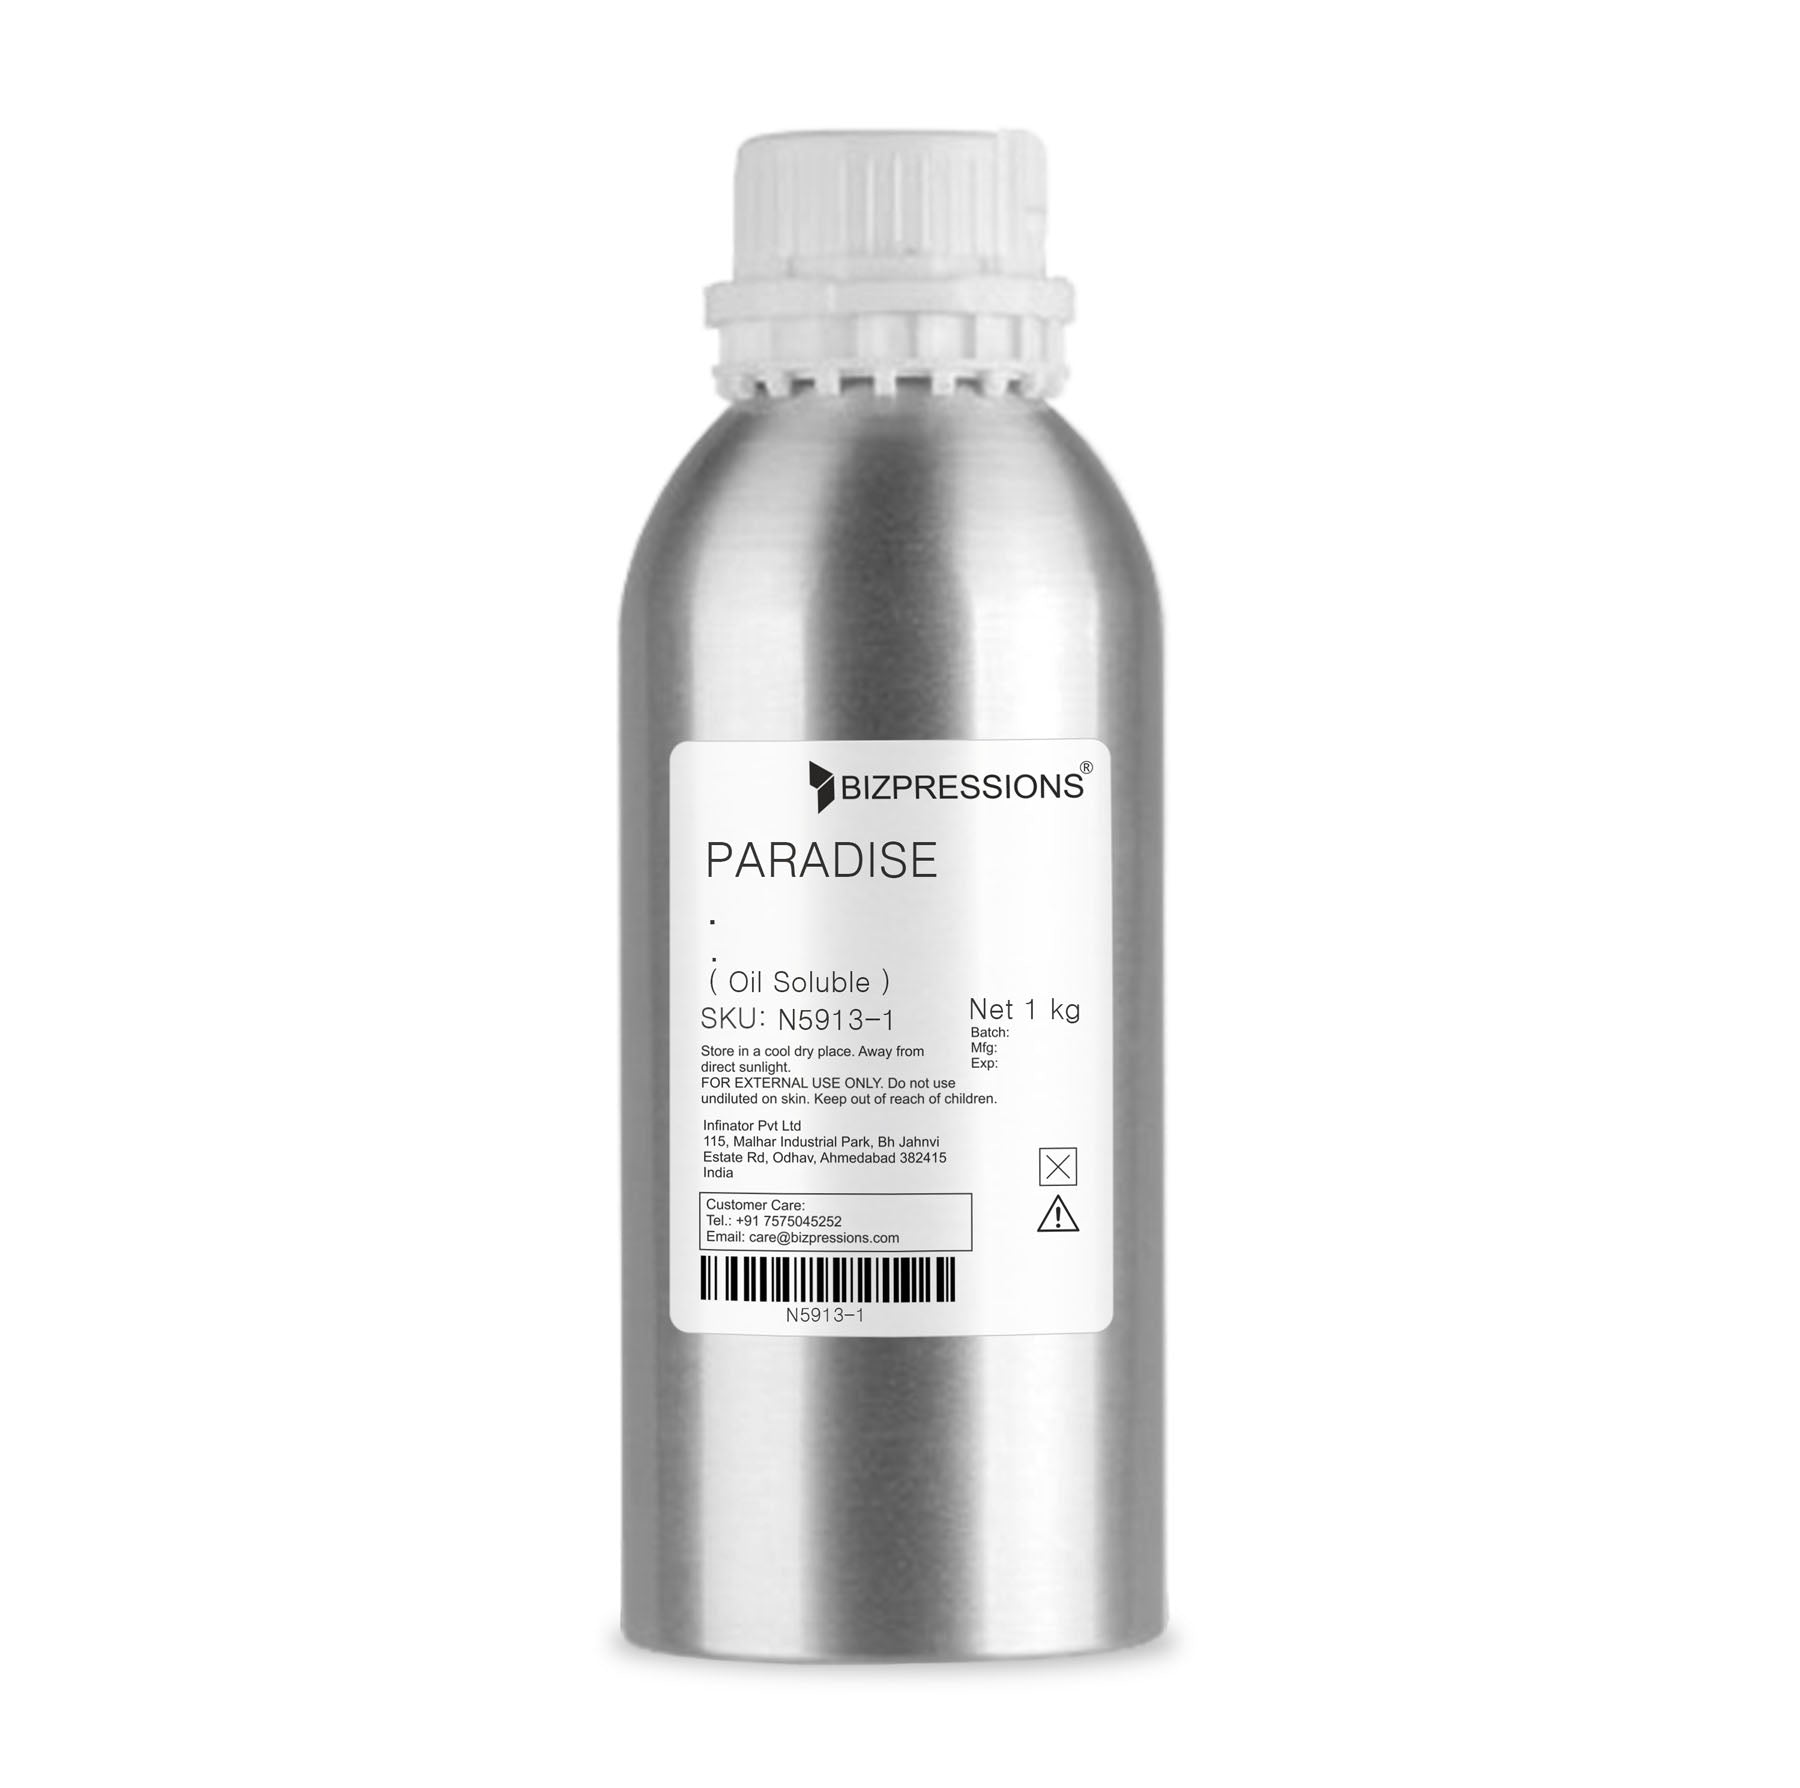 PARADISE - Fragrance ( Oil Soluble ) - 1 kg